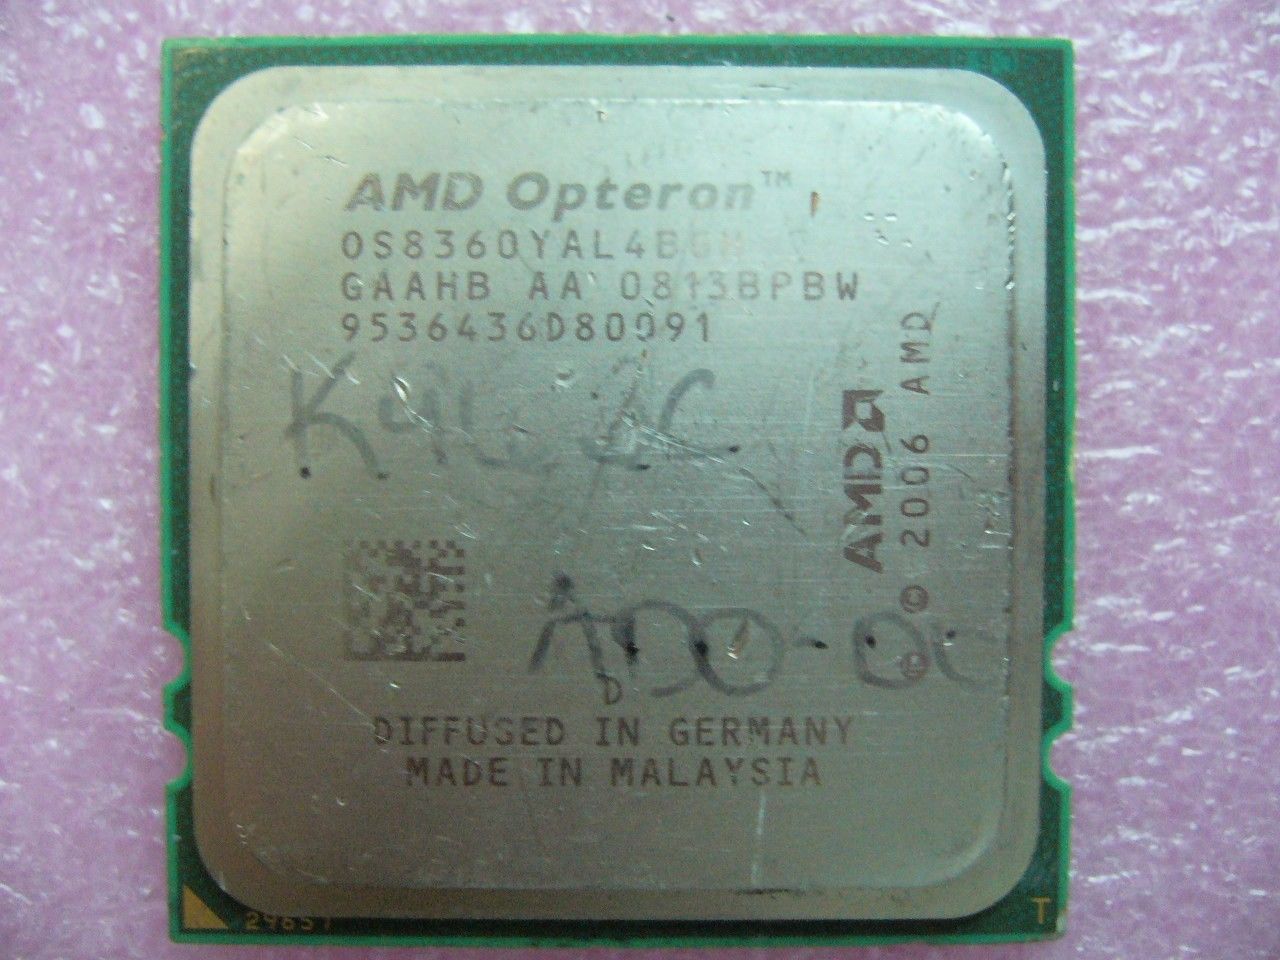 QTY 1x AMD Opteron 8360 SE 2.5 GHz Quad-Core (OS8360YAL4BGH CPU Socket F 1207